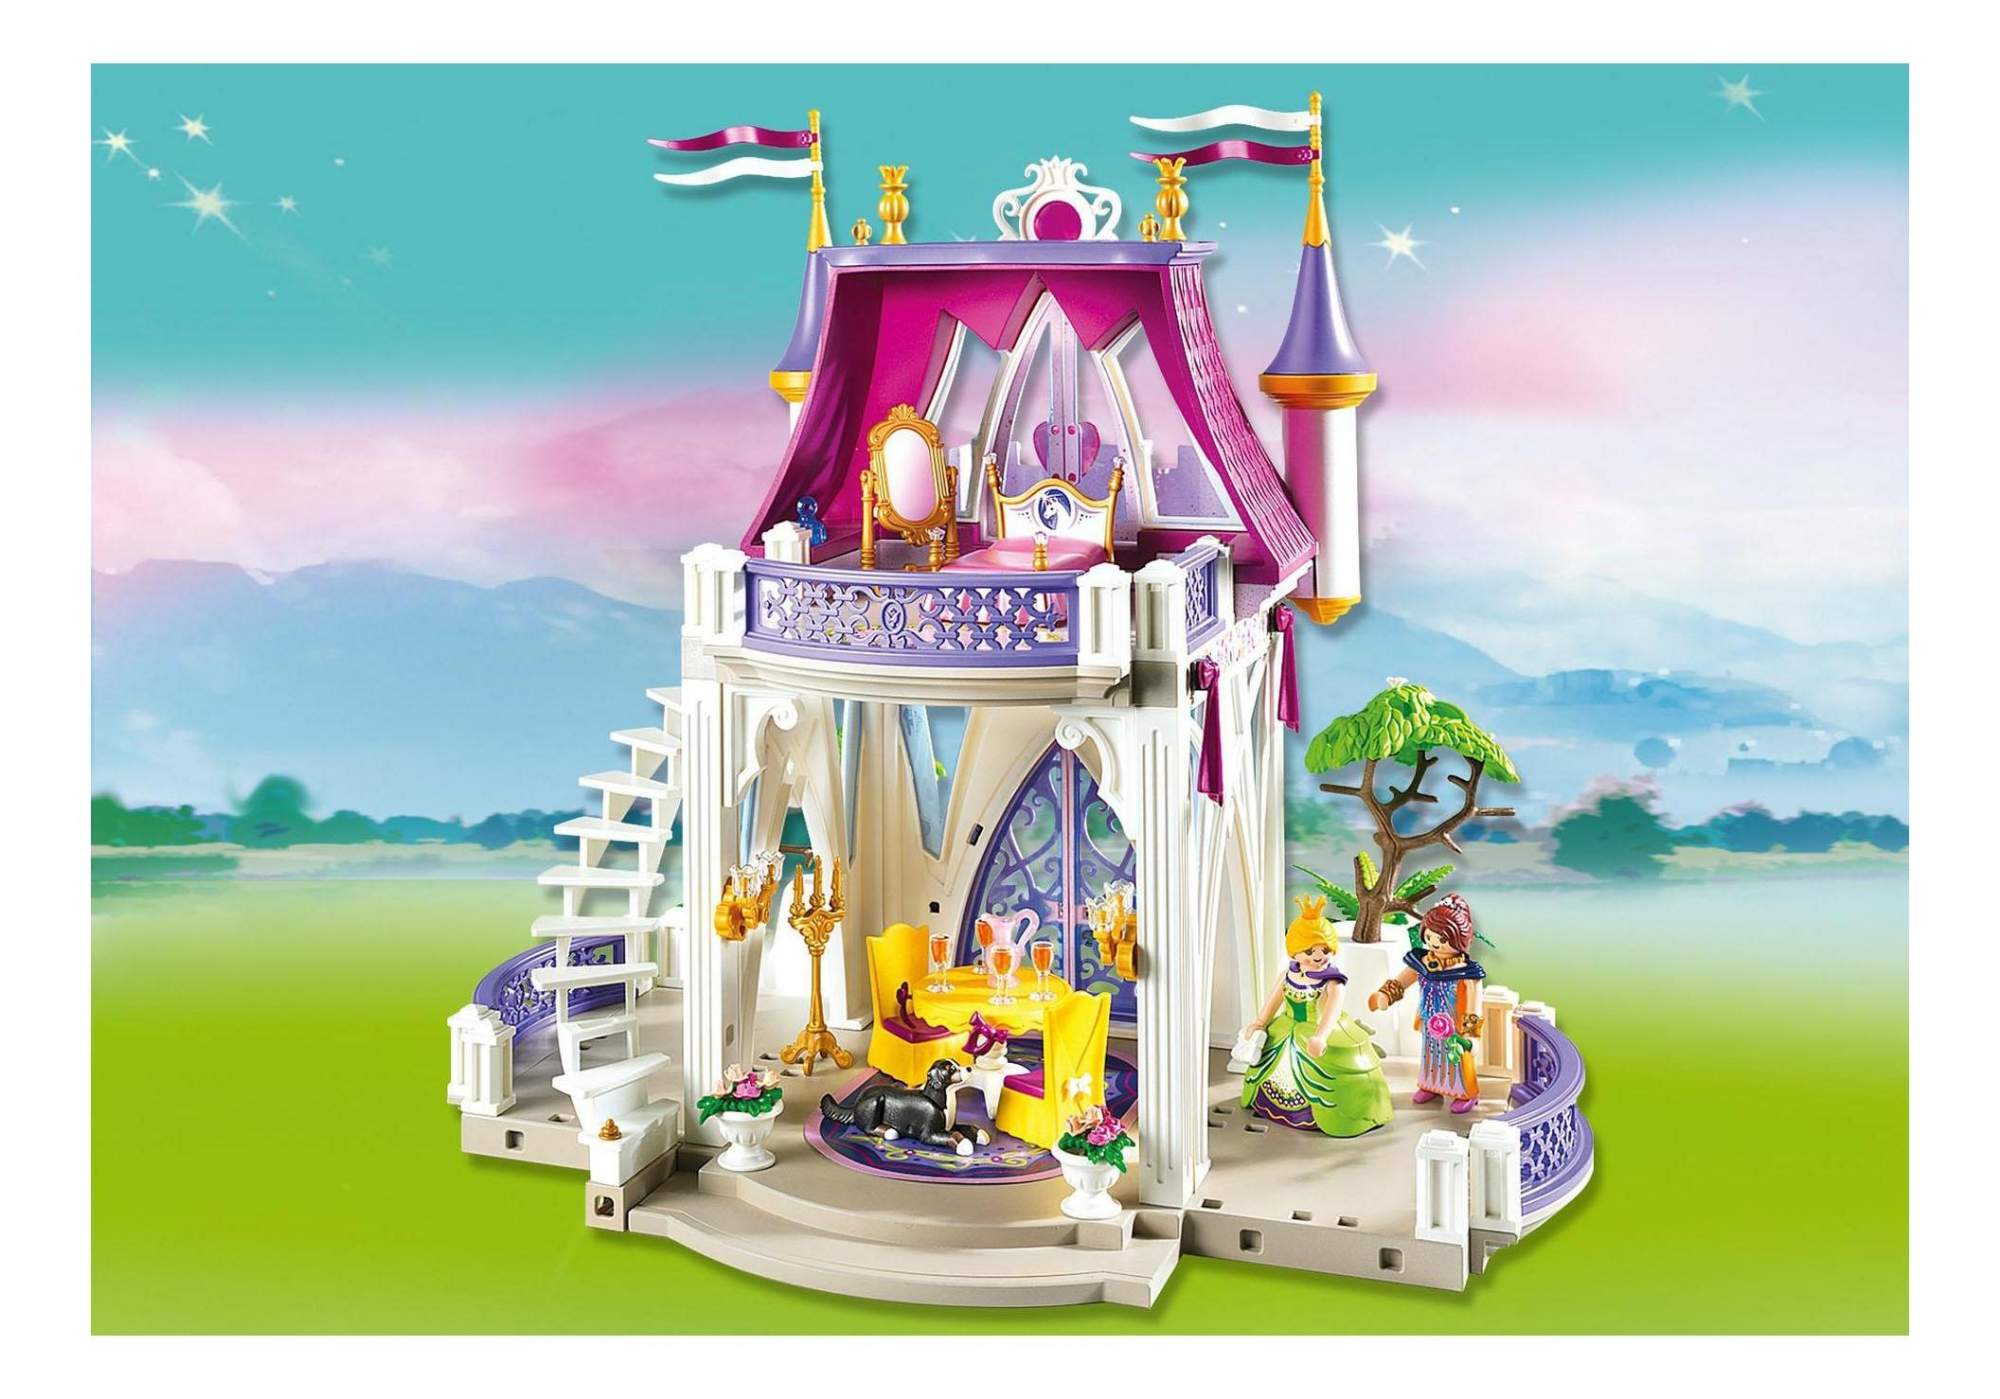 Замок единорога. Playmobil замок единорога. Конструктор дворец принцессы Плэймобил. Playmobil замок принцессы. Playmobil дворец принцессы.